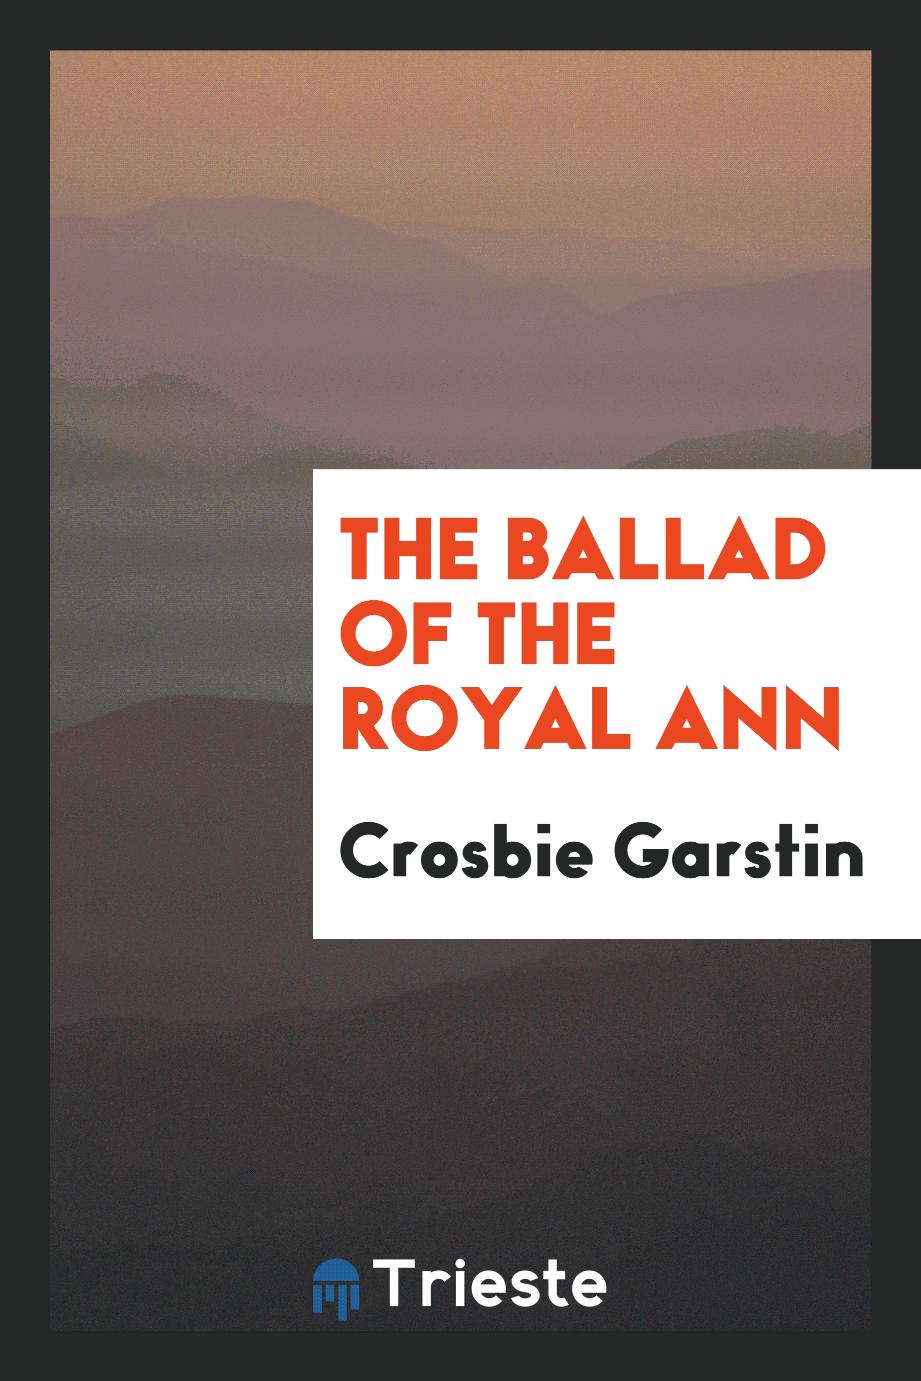 The ballad of the Royal Ann